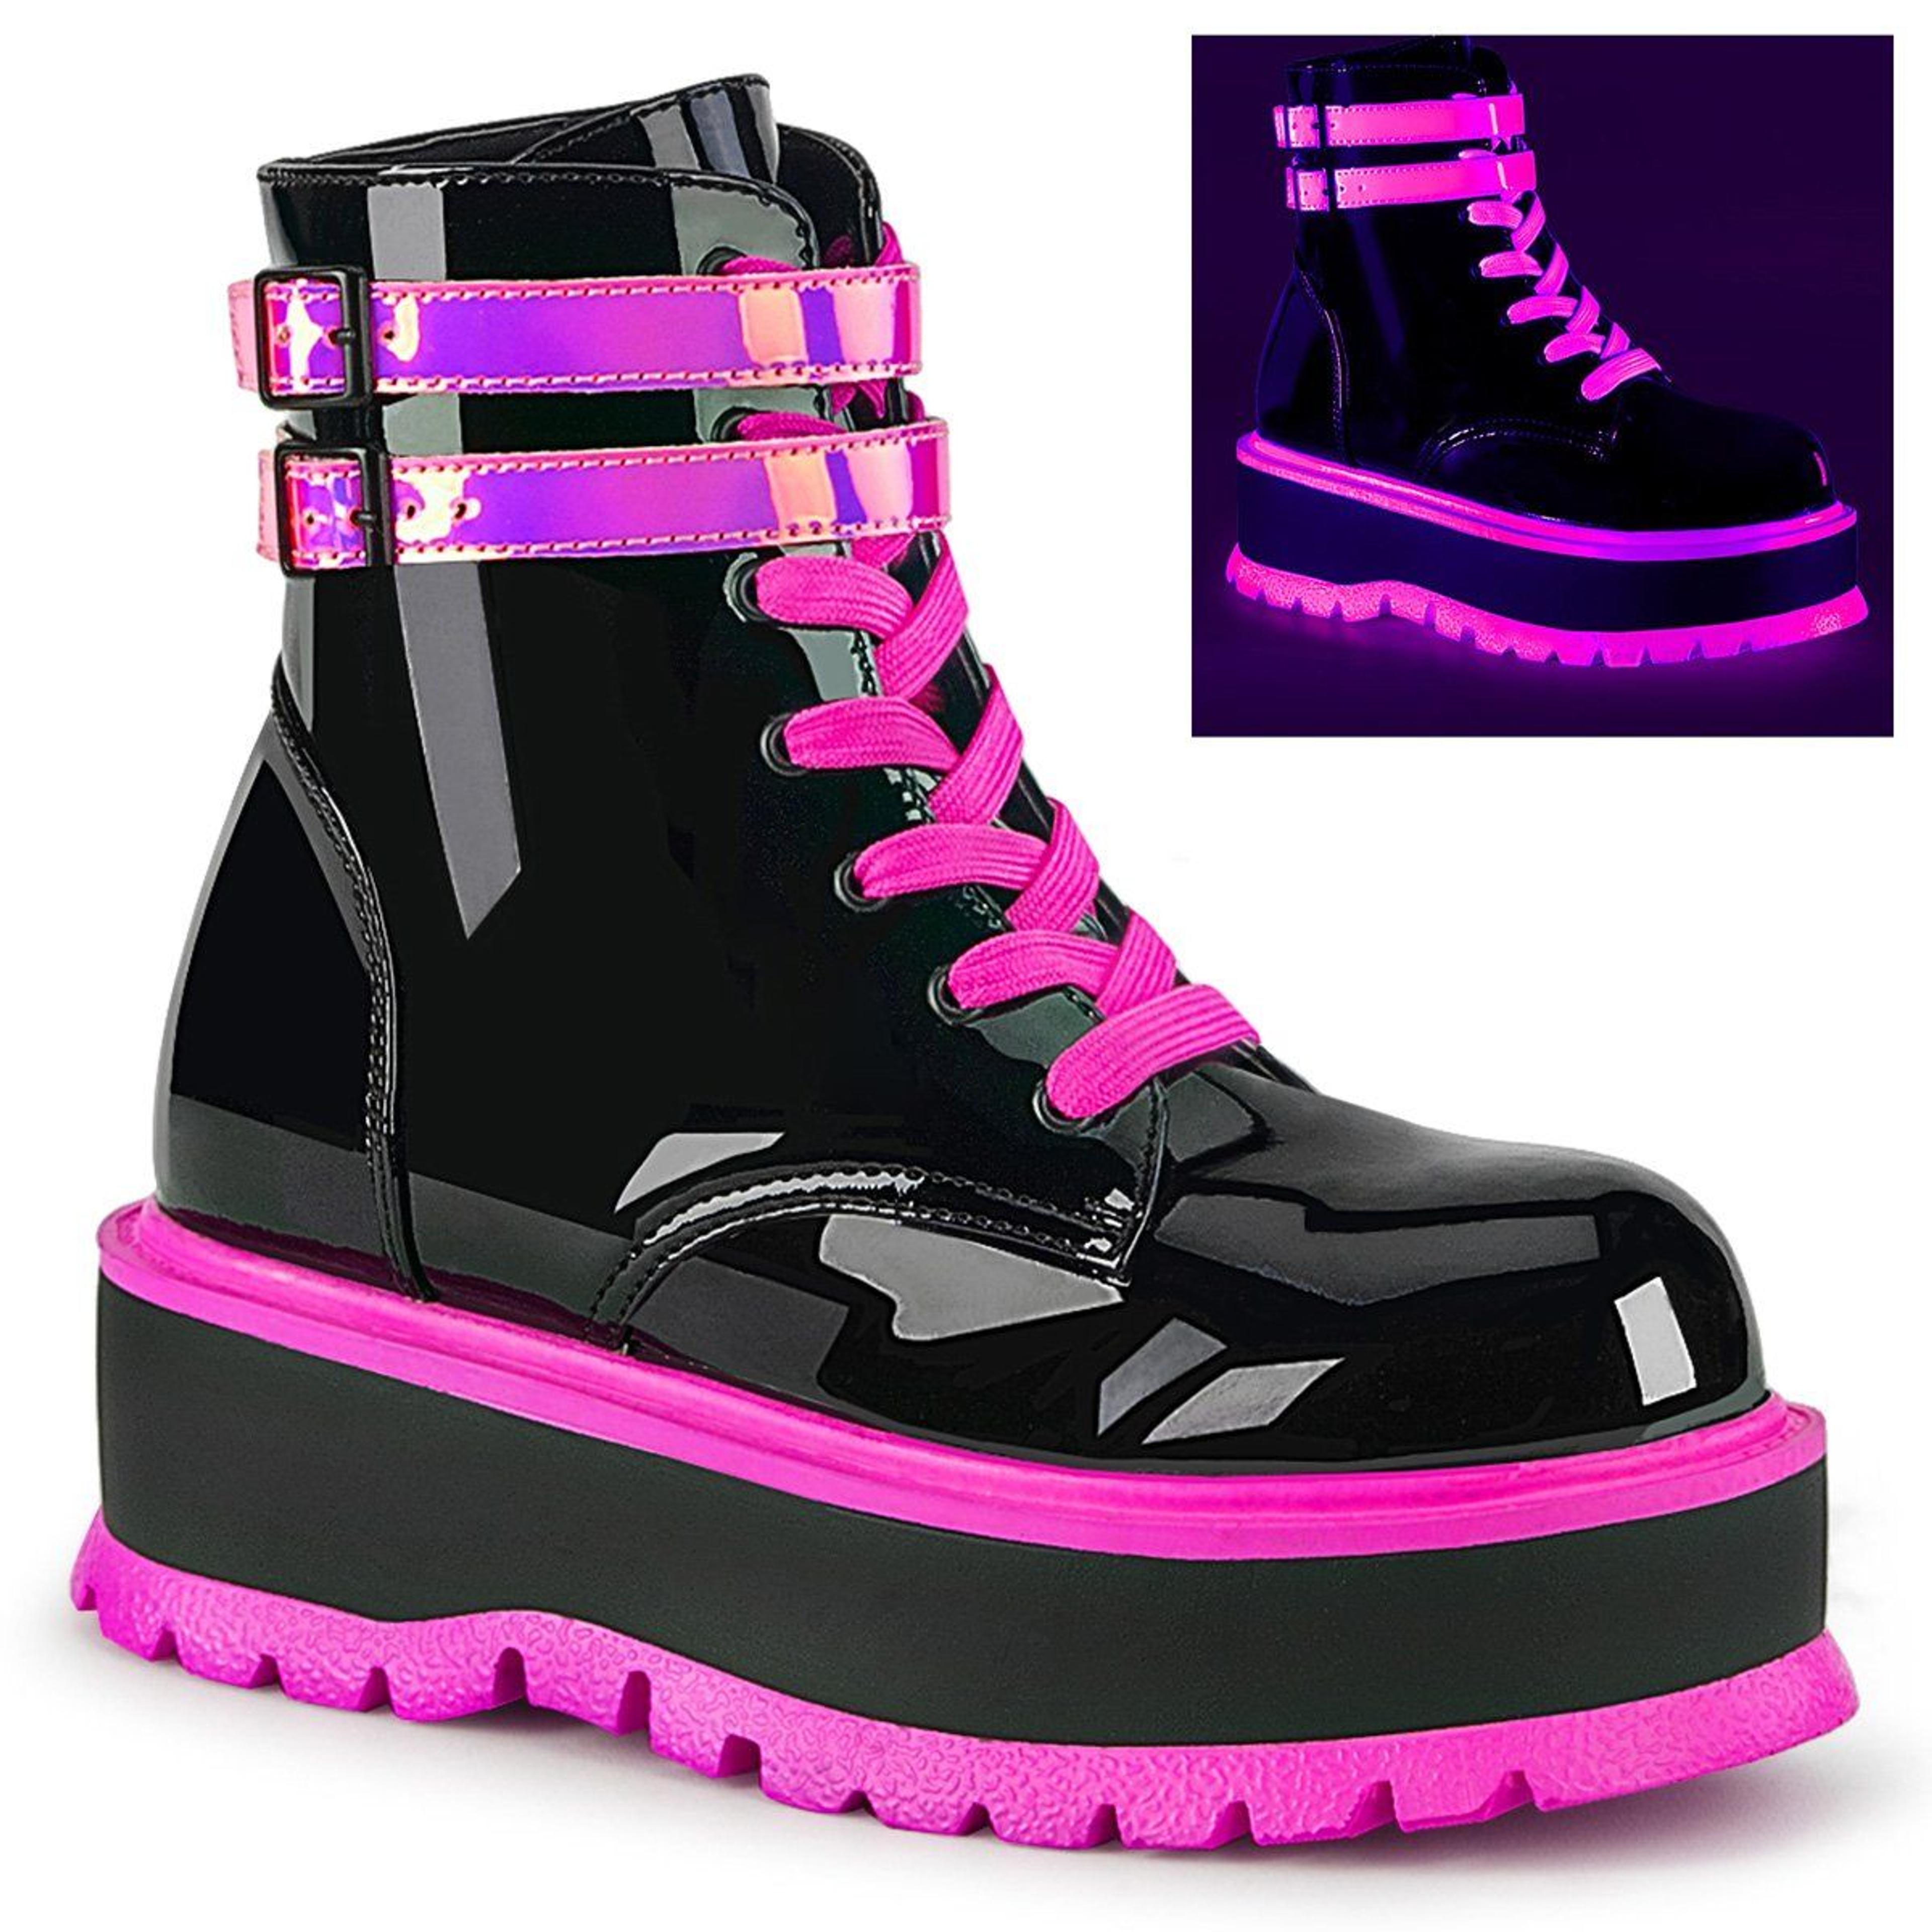 Slacker 52 Black Patent Pink UV Neon Platform Cyber Ankle Boots - 8 / Pink Trim